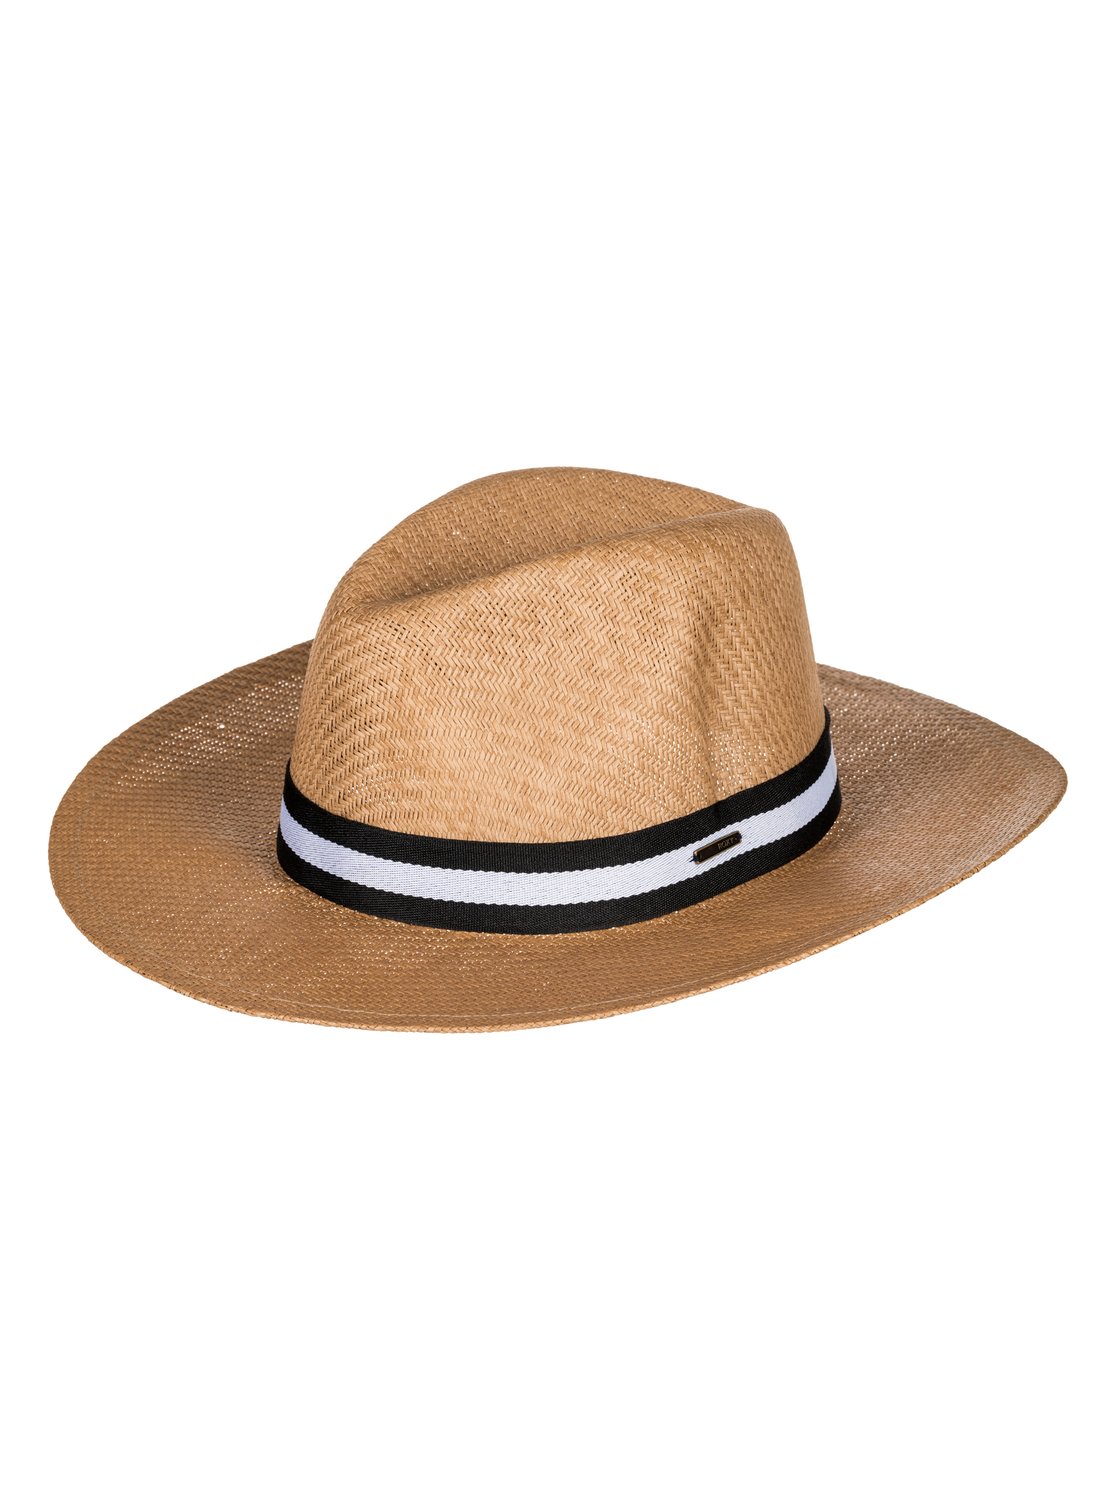 Here We Go Straw Panama Hat